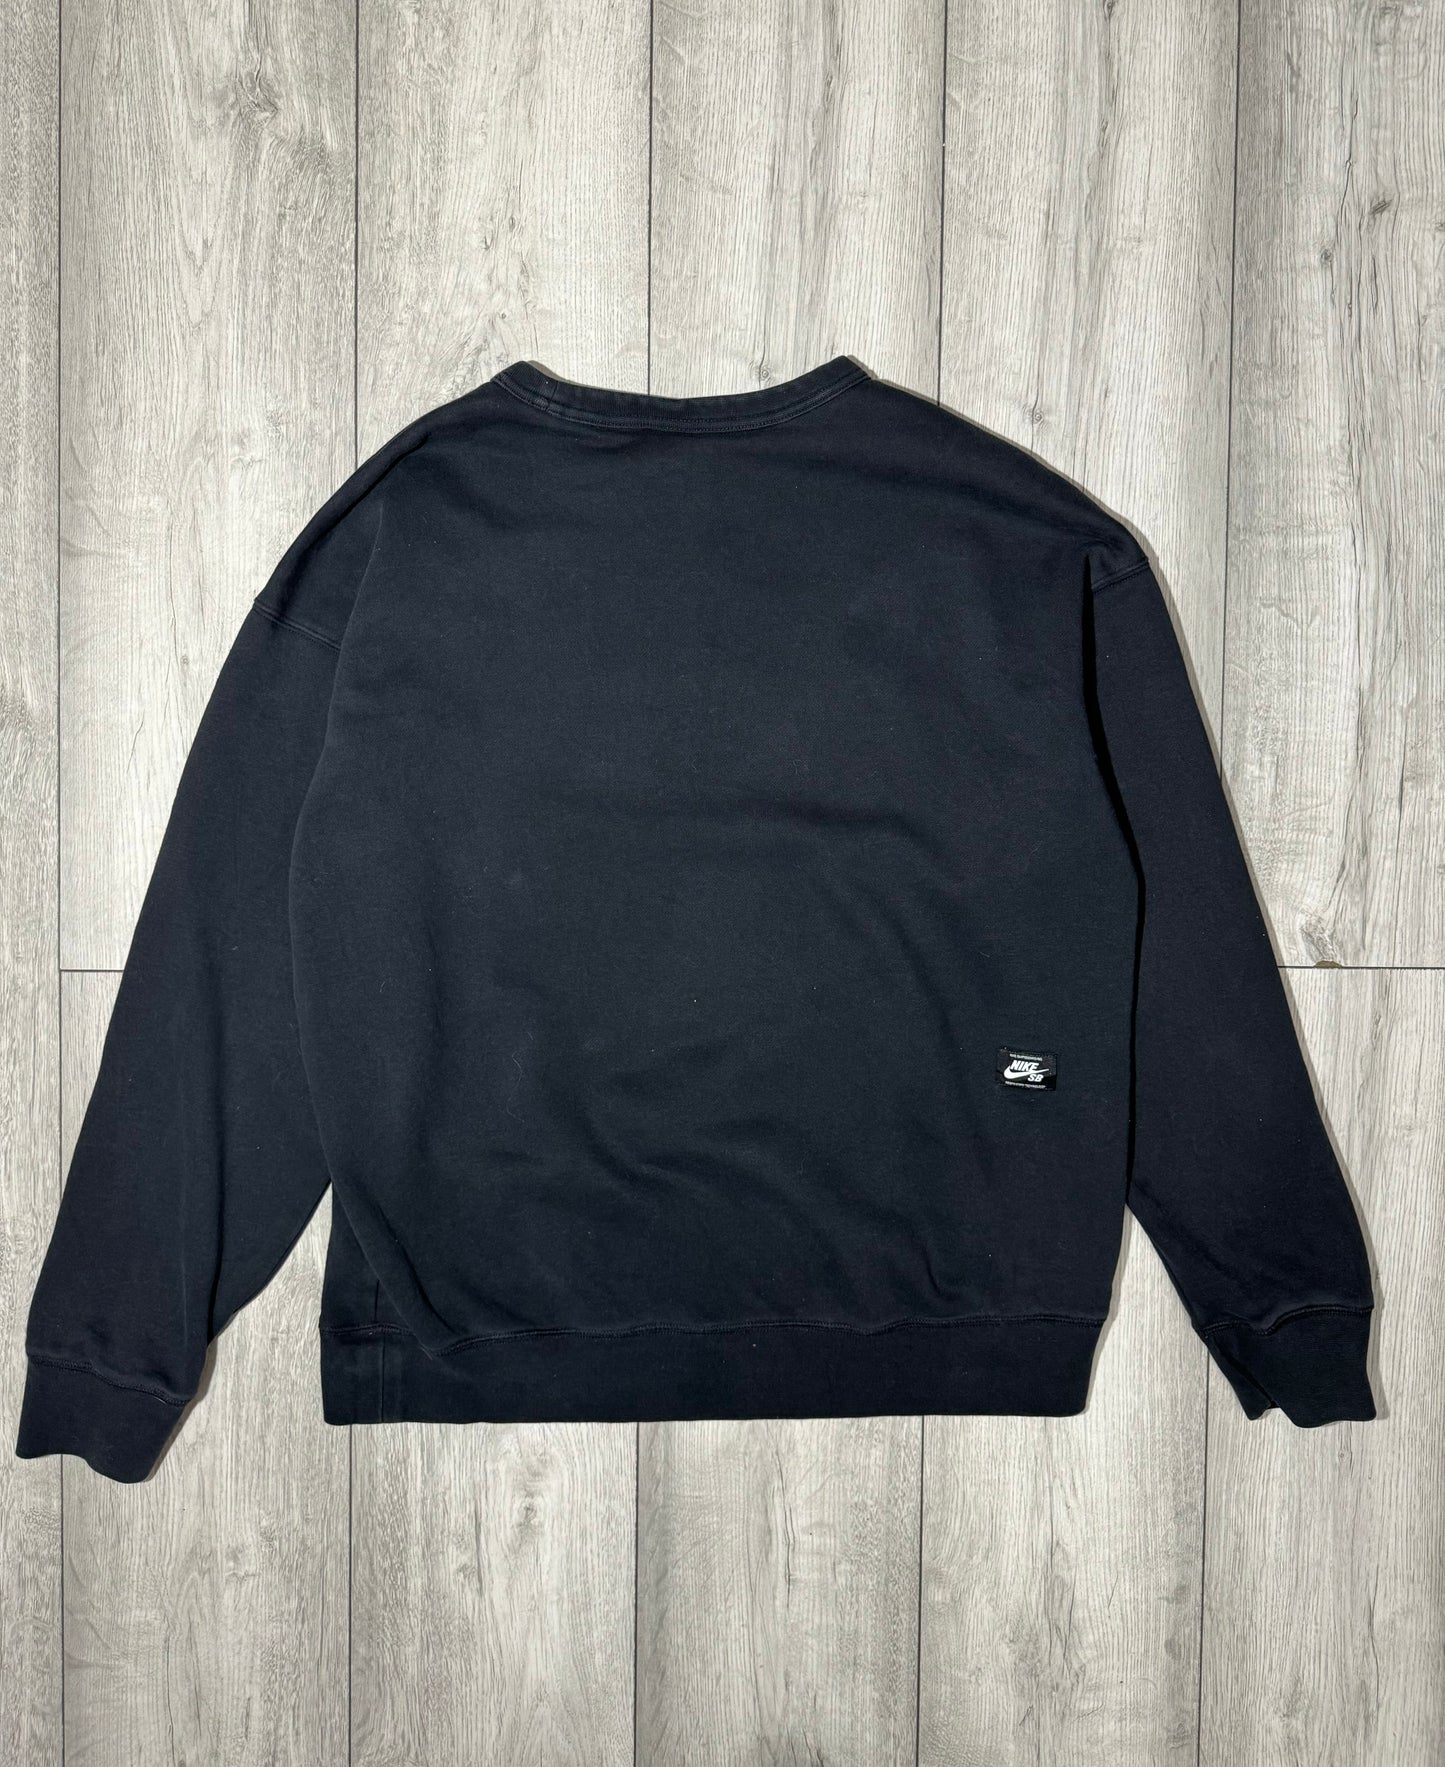 Black Nike SB Sweatshirt